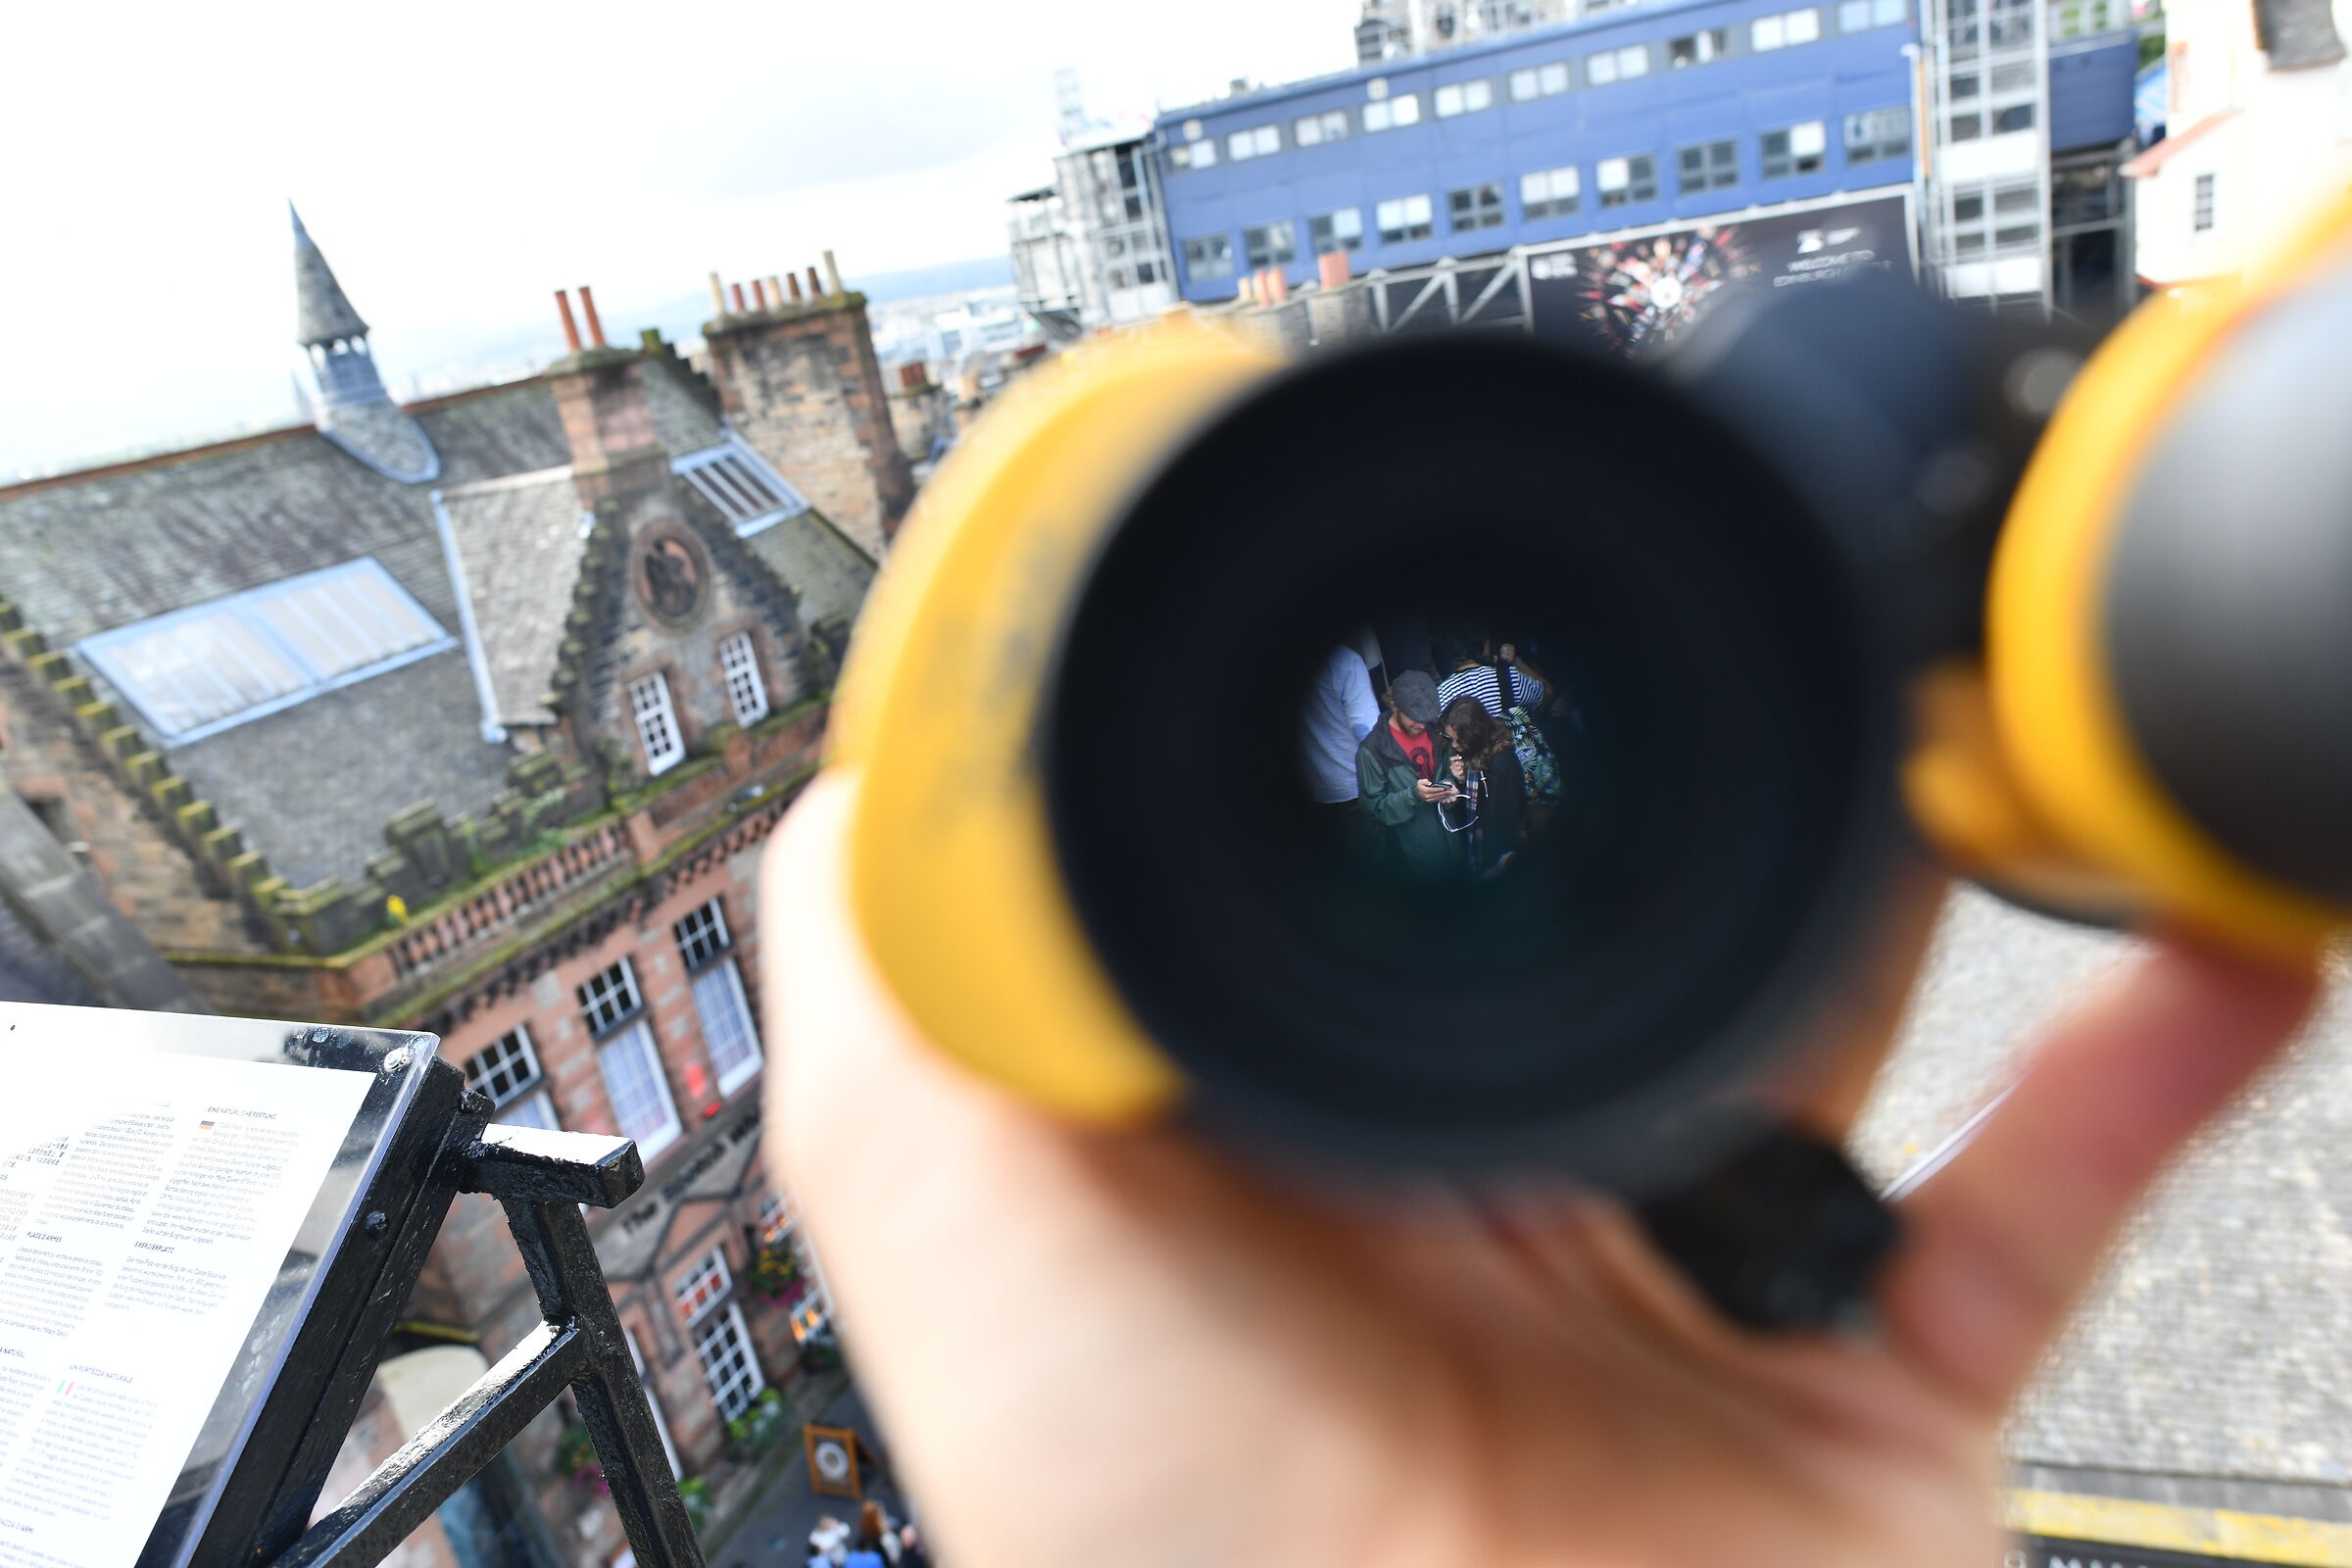 What we peek at from the binoculars...